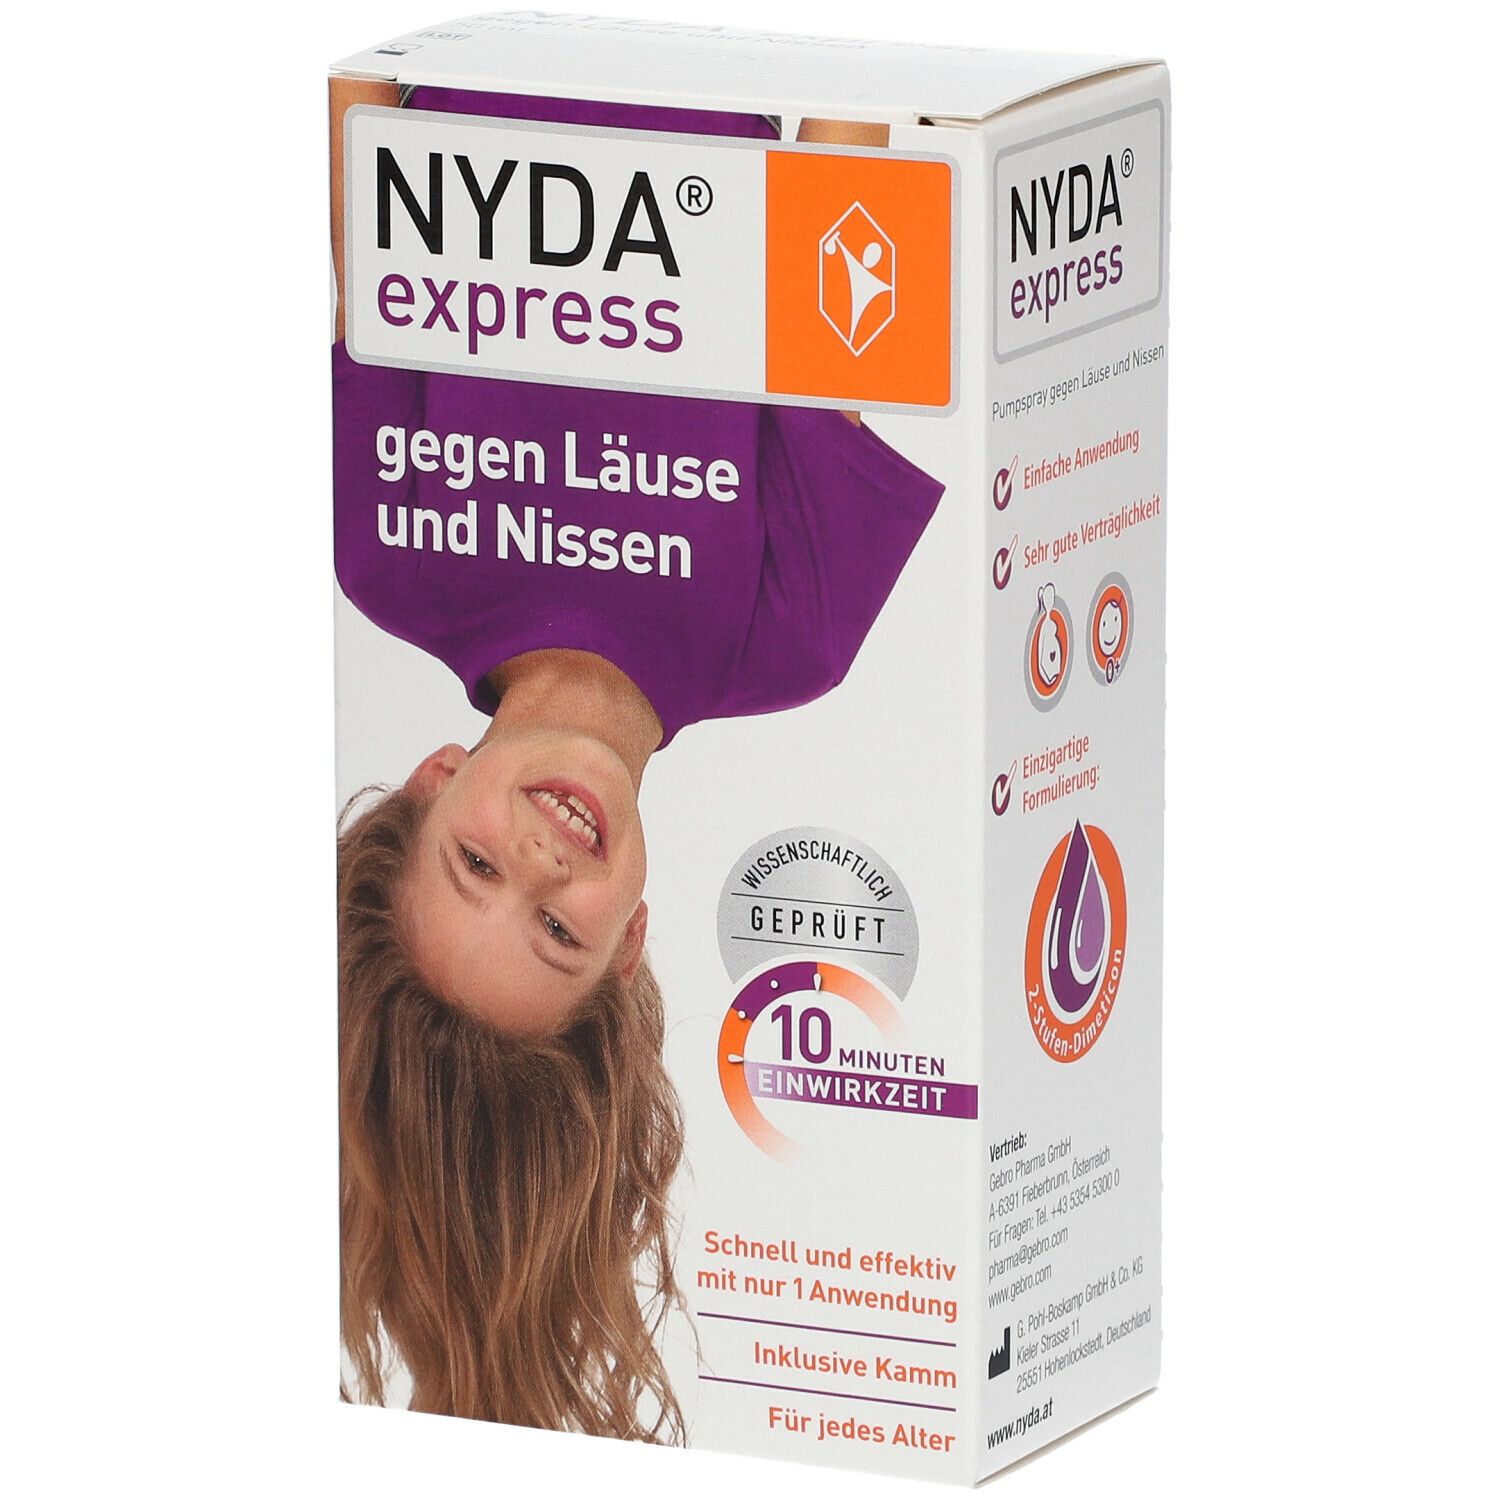 NYDA® express